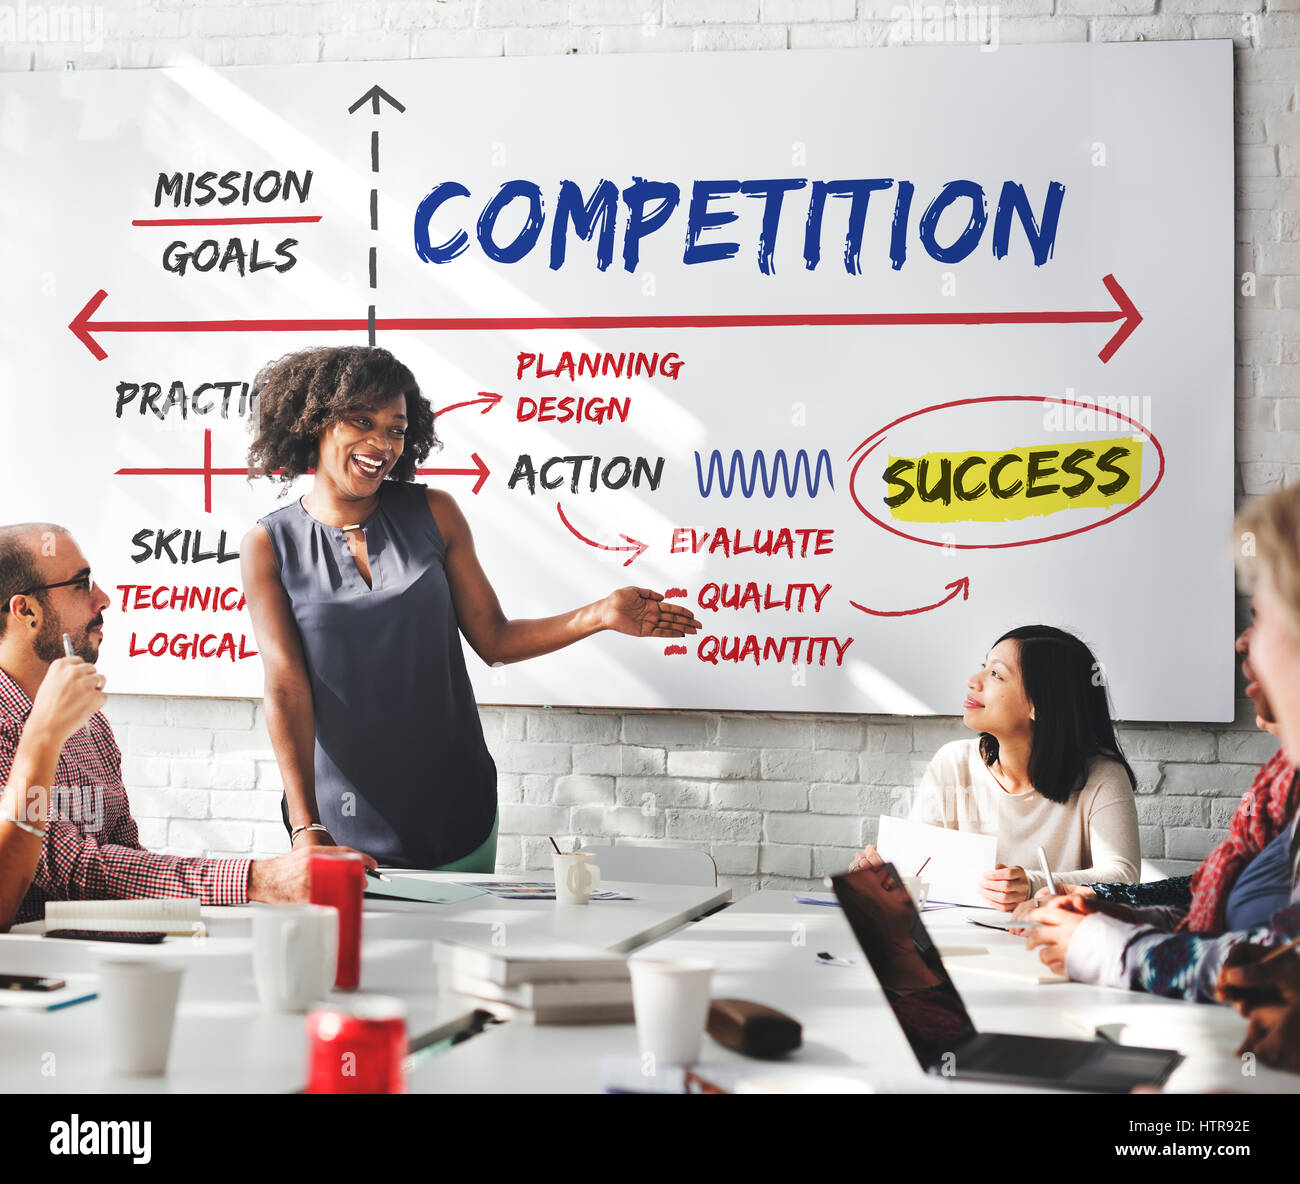 Target Achievement Goals Strategy Concept Stock Photo